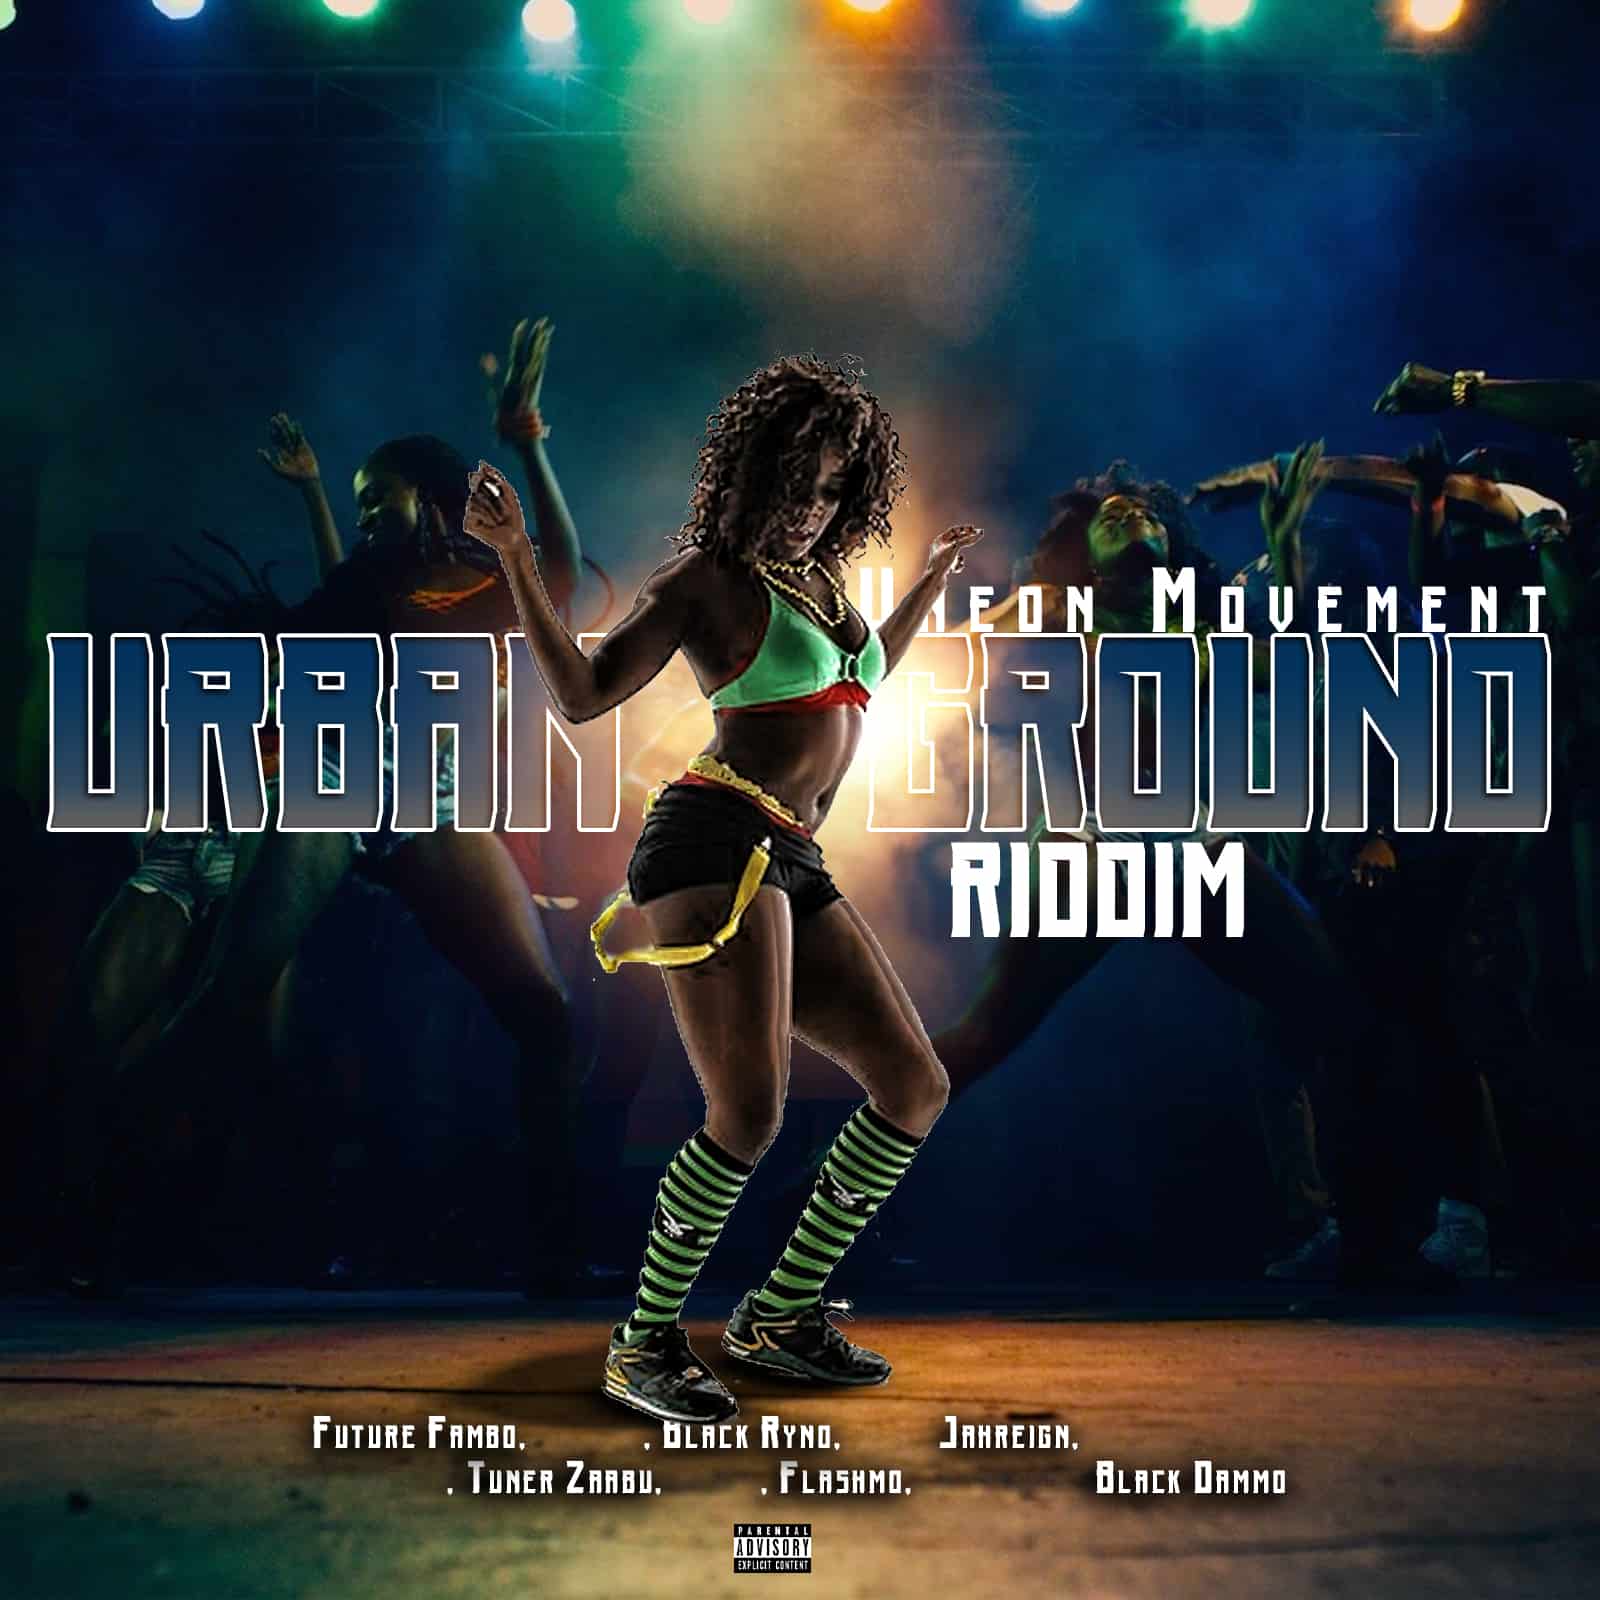 Urban Ground Riddim - Uneon Movement Records